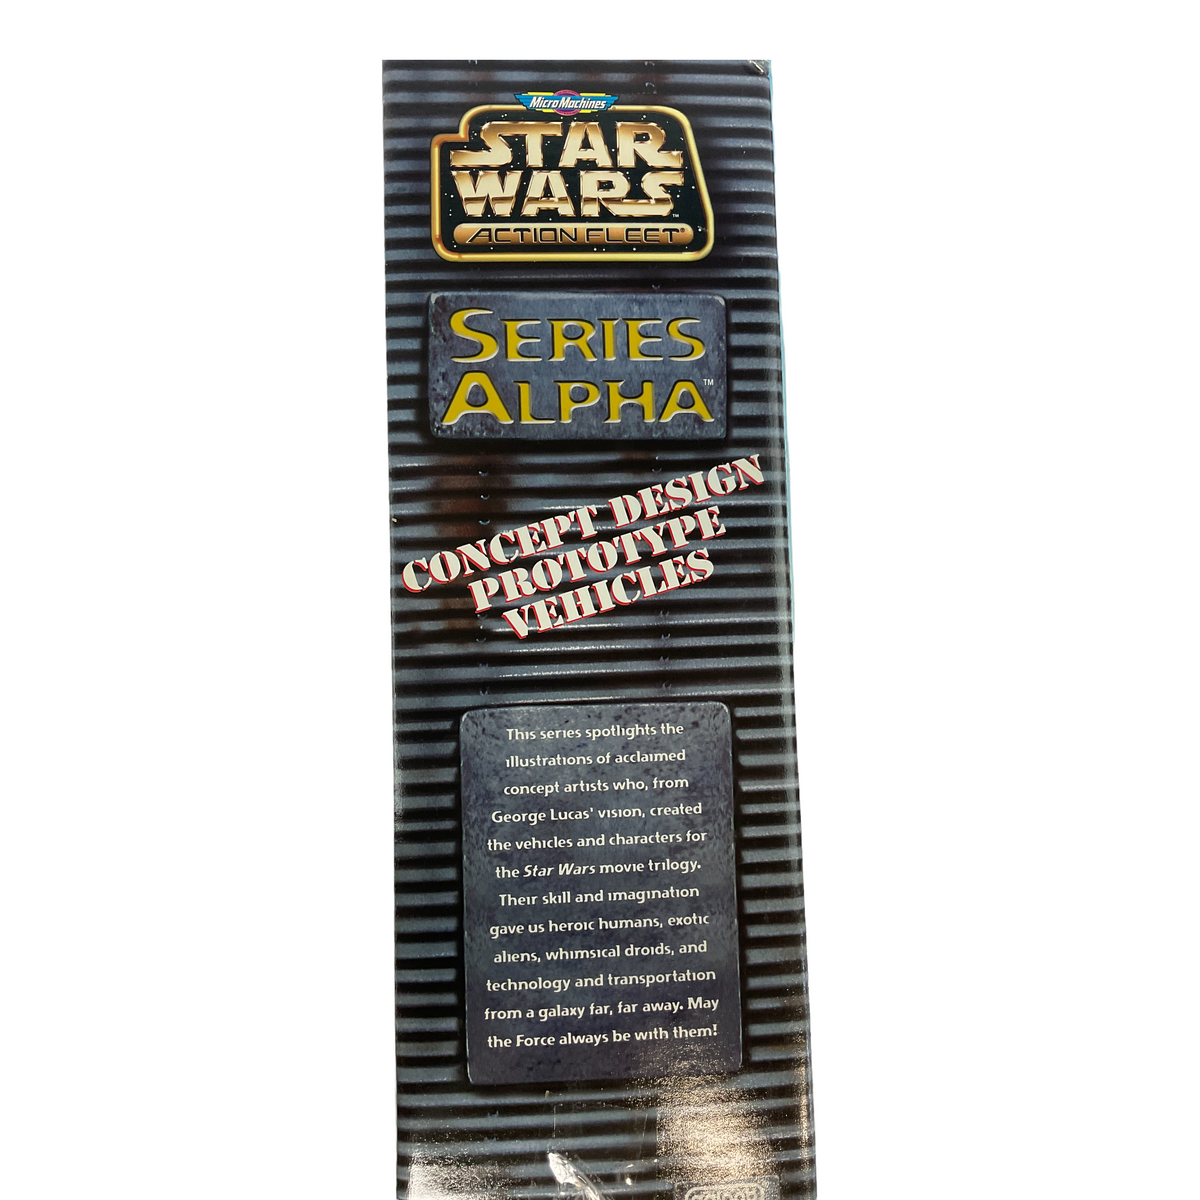 Star Wars Action Fleet Series Alpha Y-wing